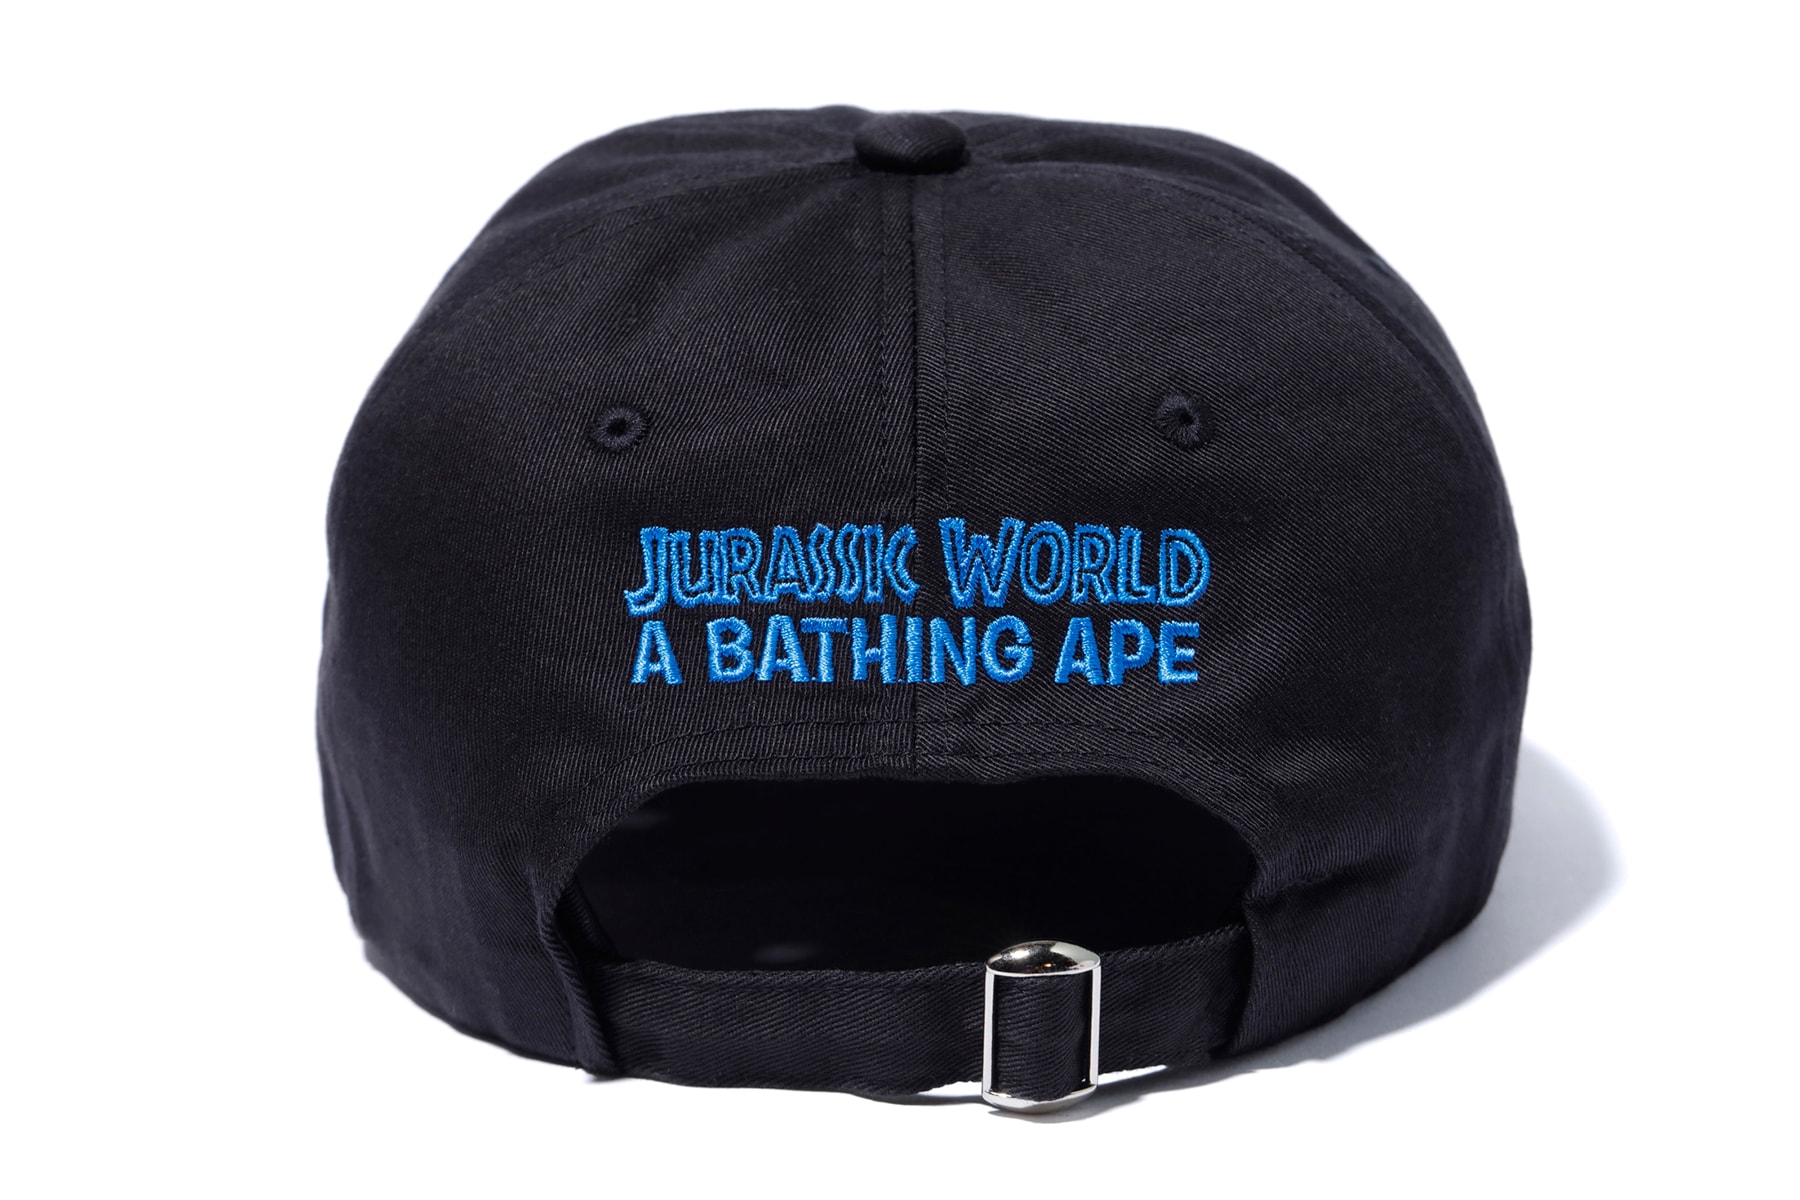 bape jurassic world fallen kingdom collaboration 2018 black cap hat blue branding logo embroidery